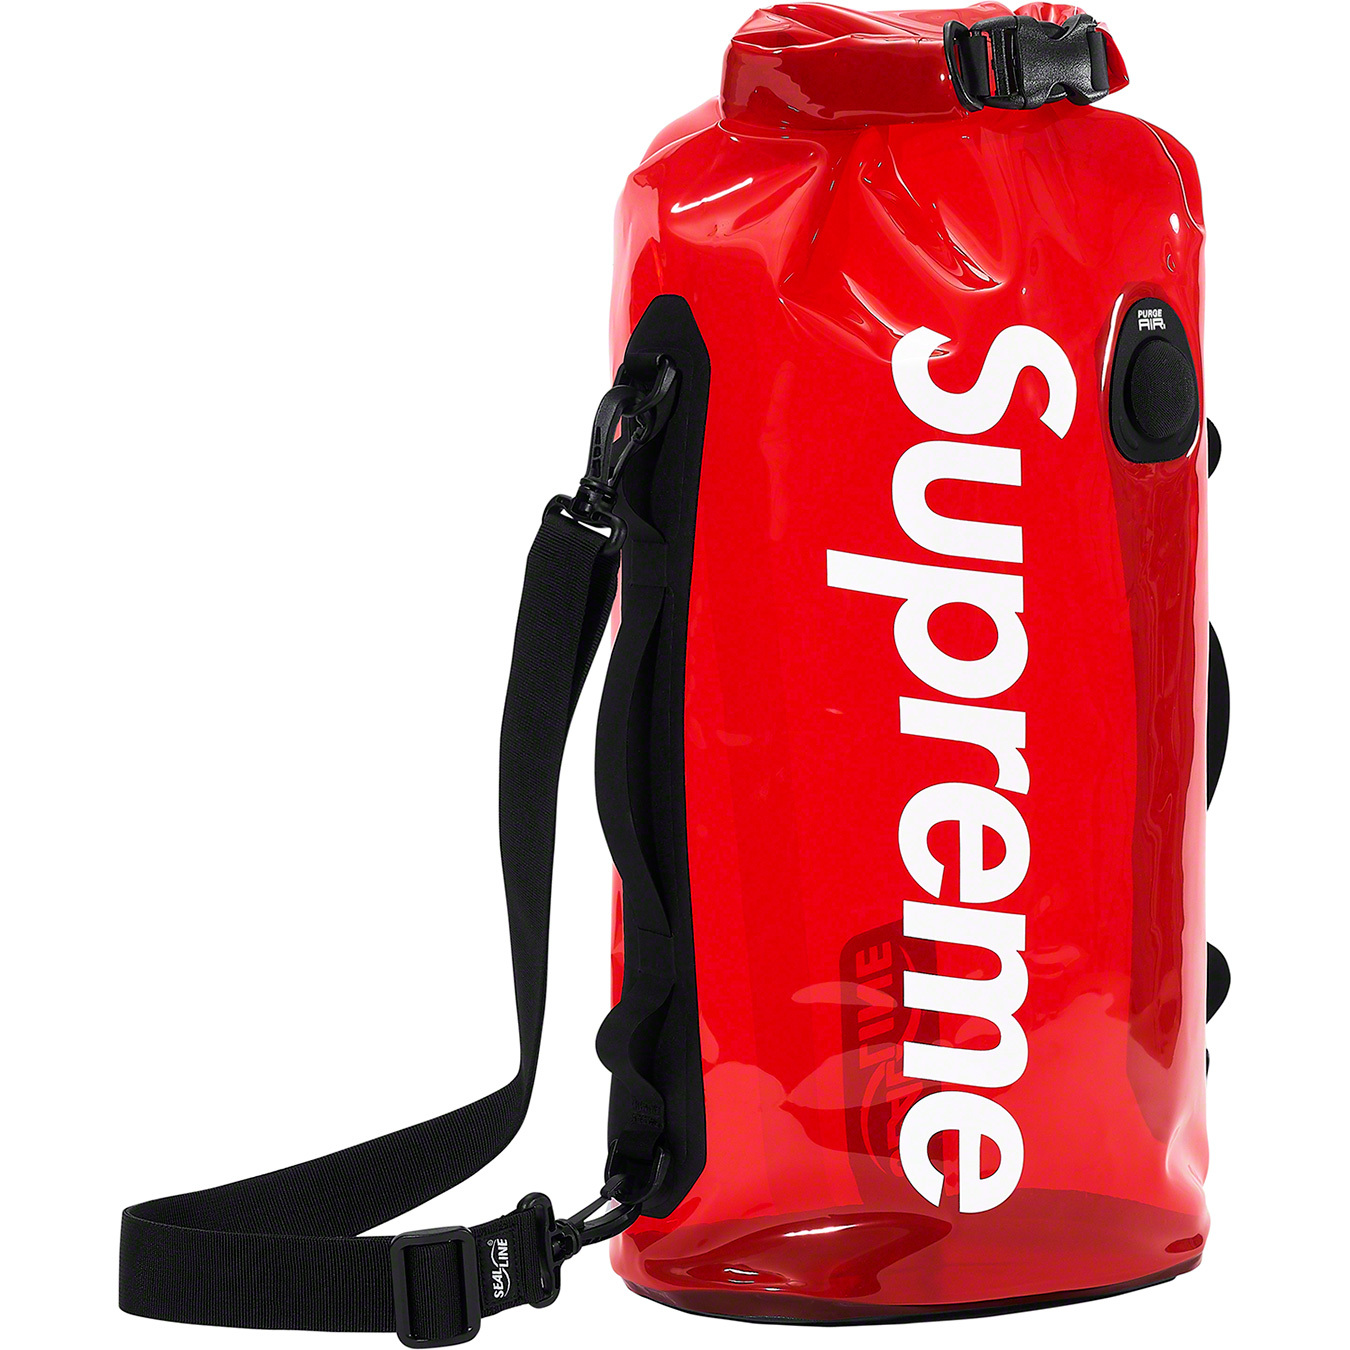 SealLine Discovery Dry Bag - 20L - spring summer 2019 - Supreme